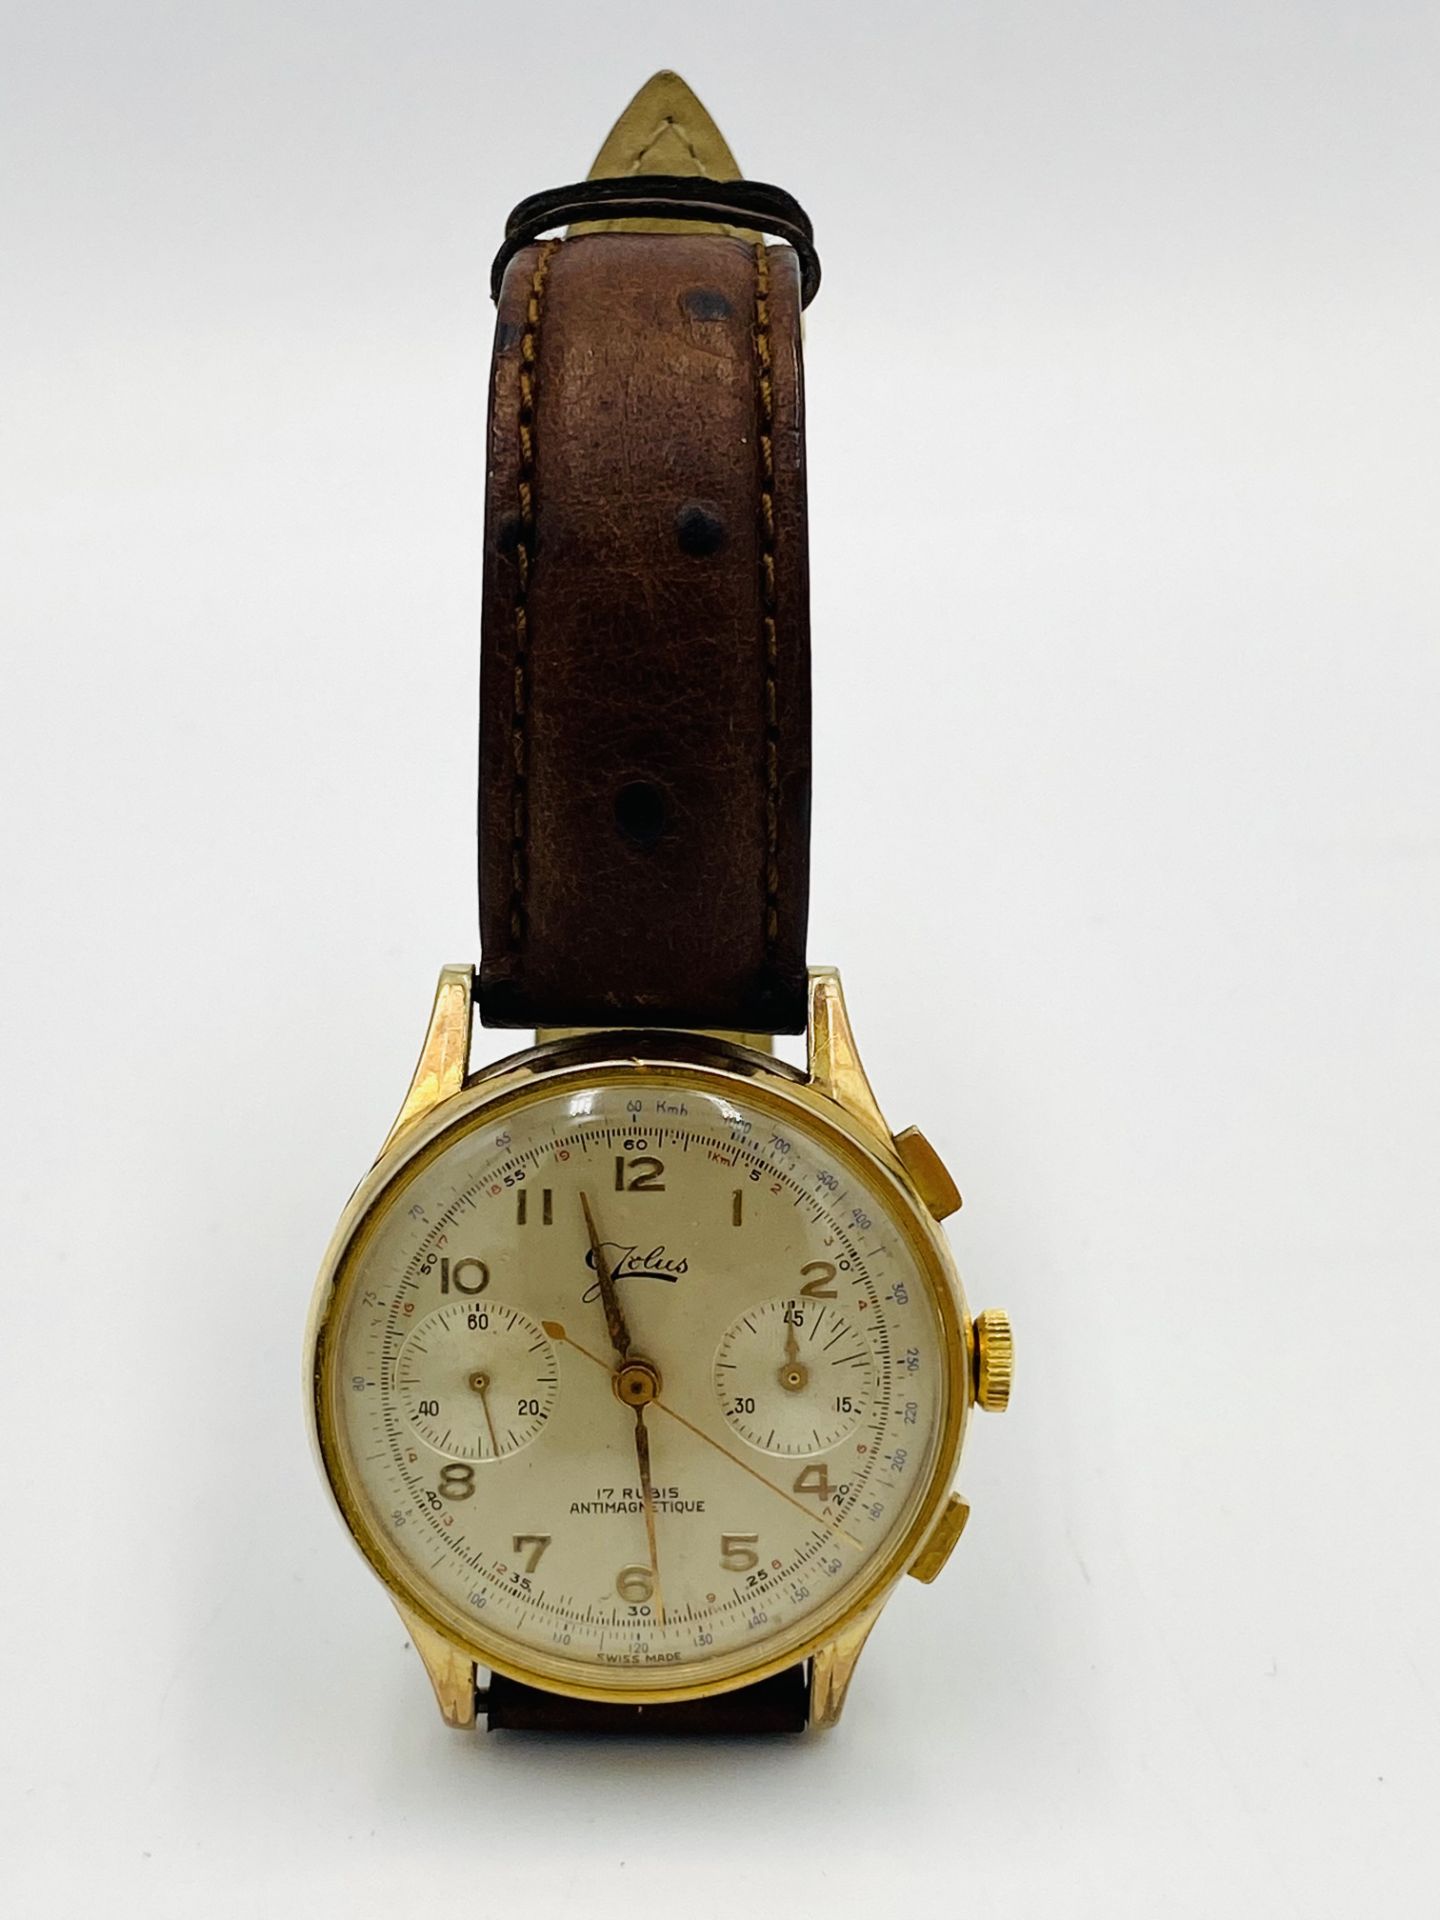 Jolus gents chronograph wrist watch - Image 3 of 8